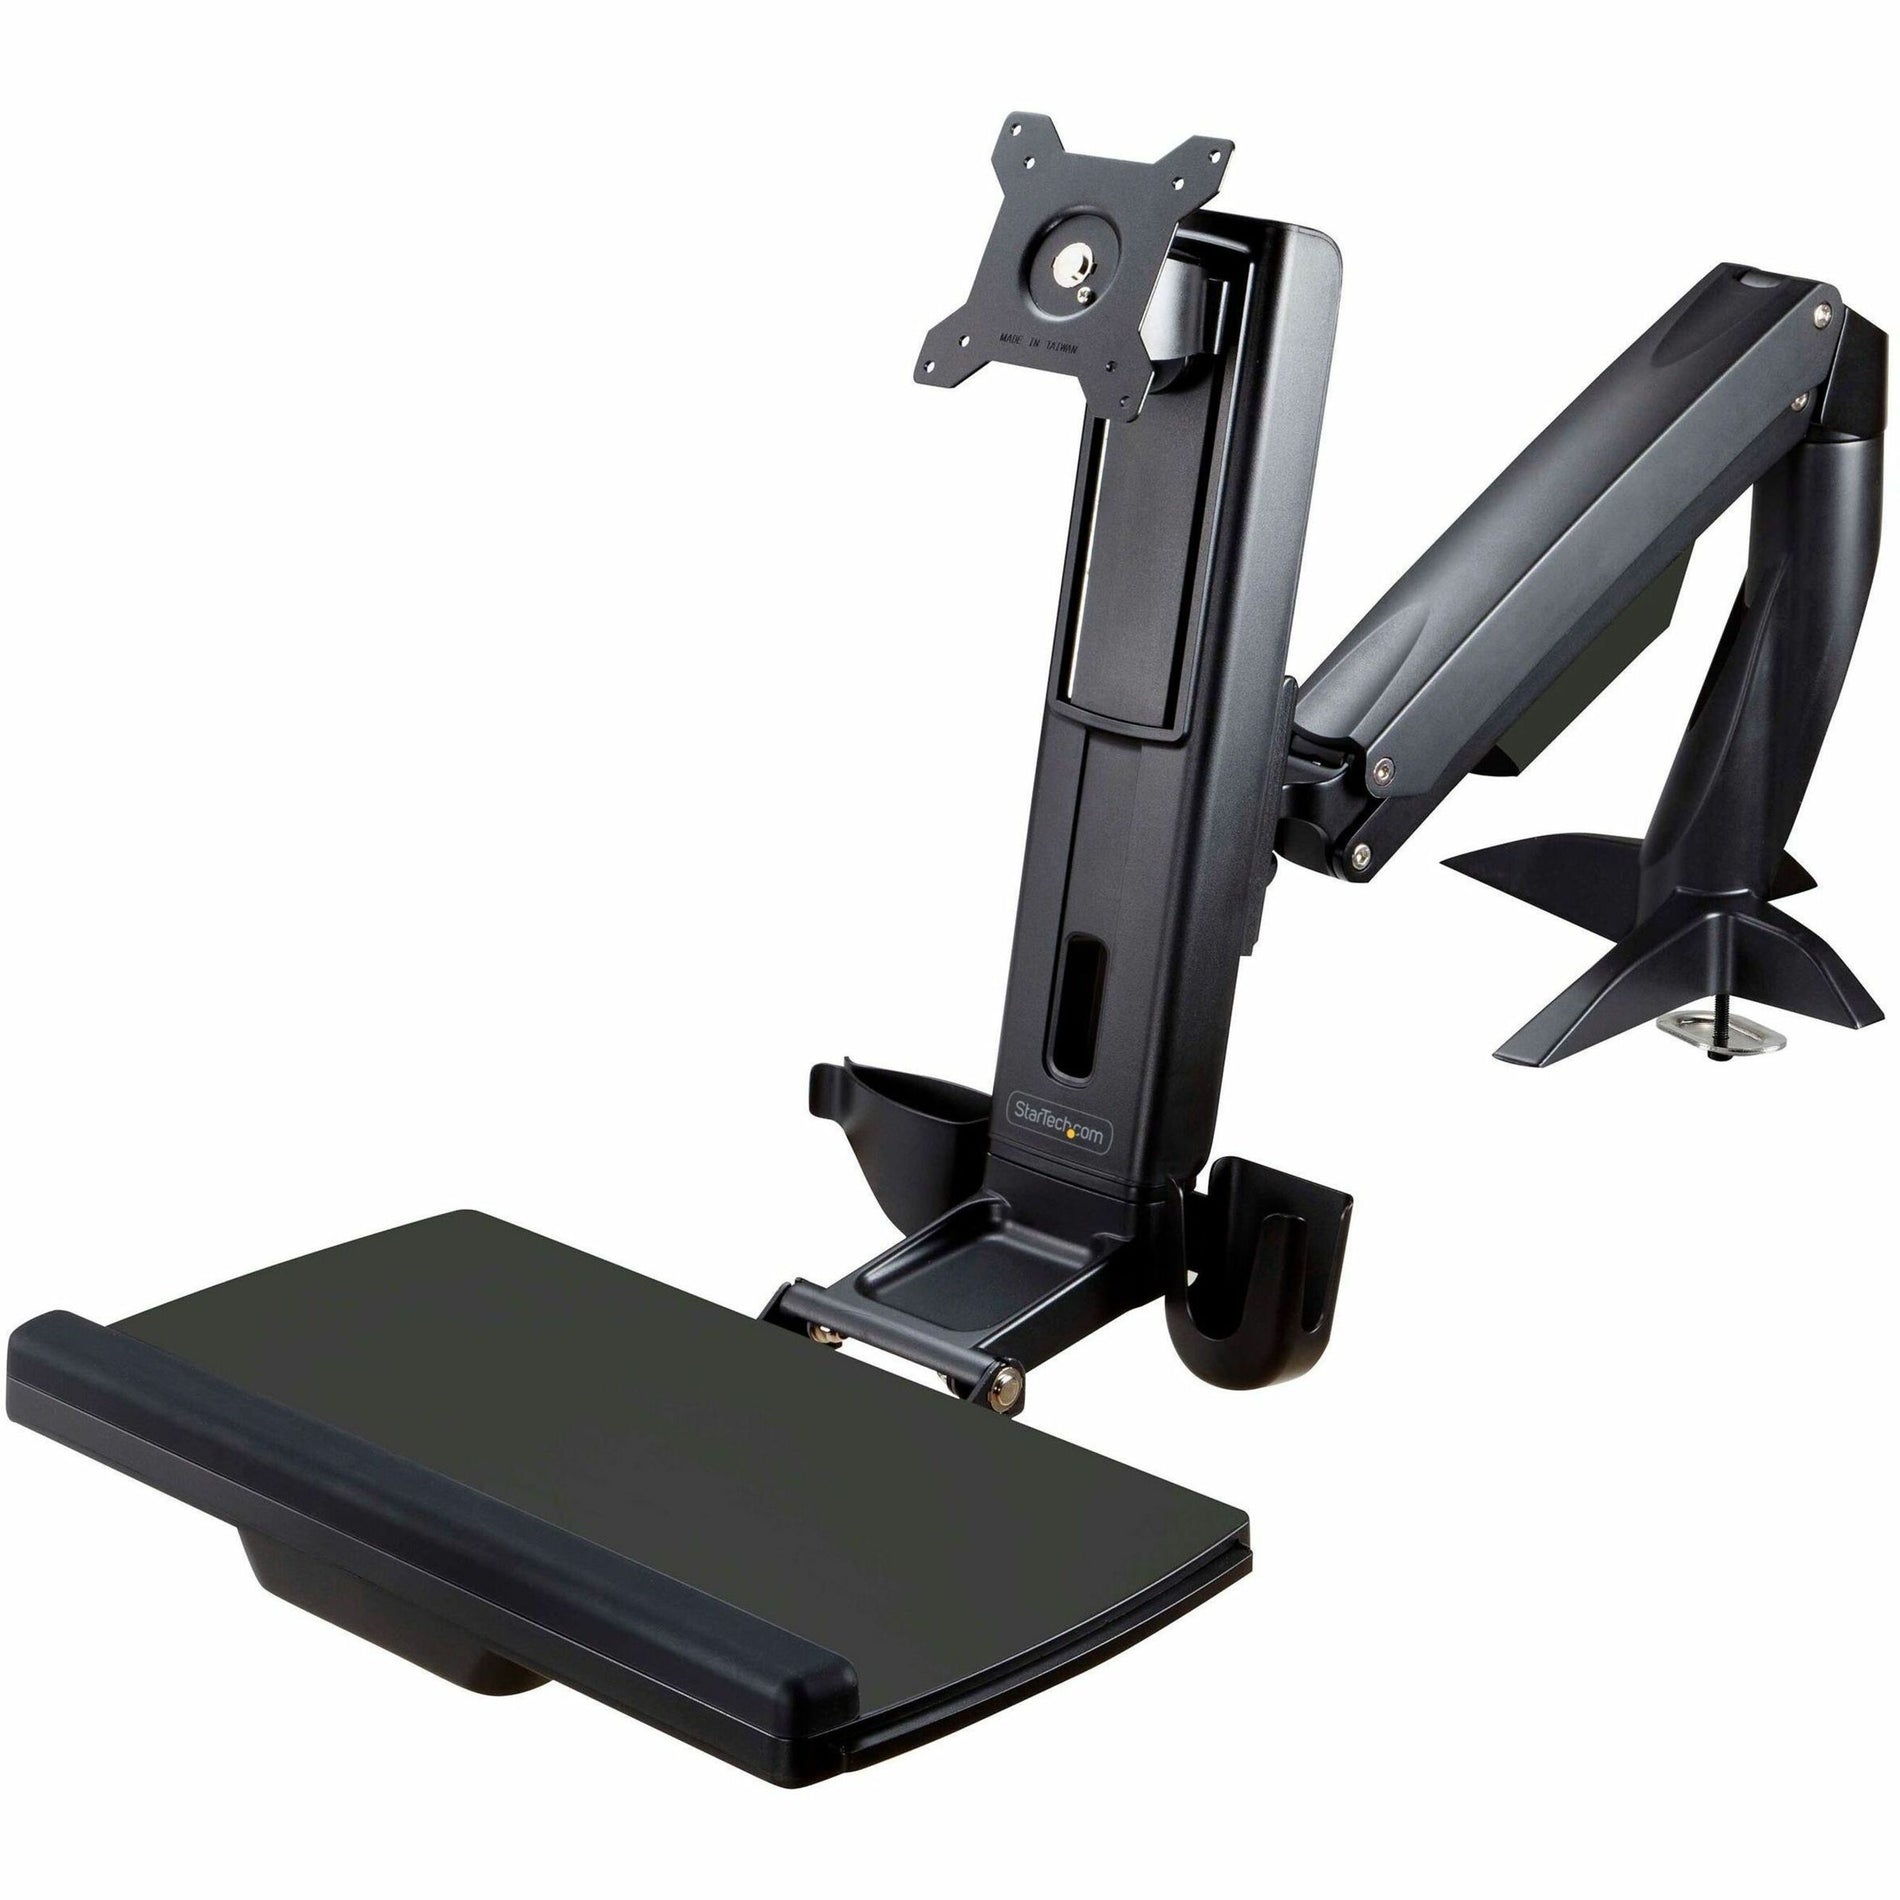 StarTech.com ARMSTSCP1 Sit-Stand Monitor Arm, Height Adjustable Desk Mount for up to 24" Monitors, VESA Mount, Ergonomic Workstation